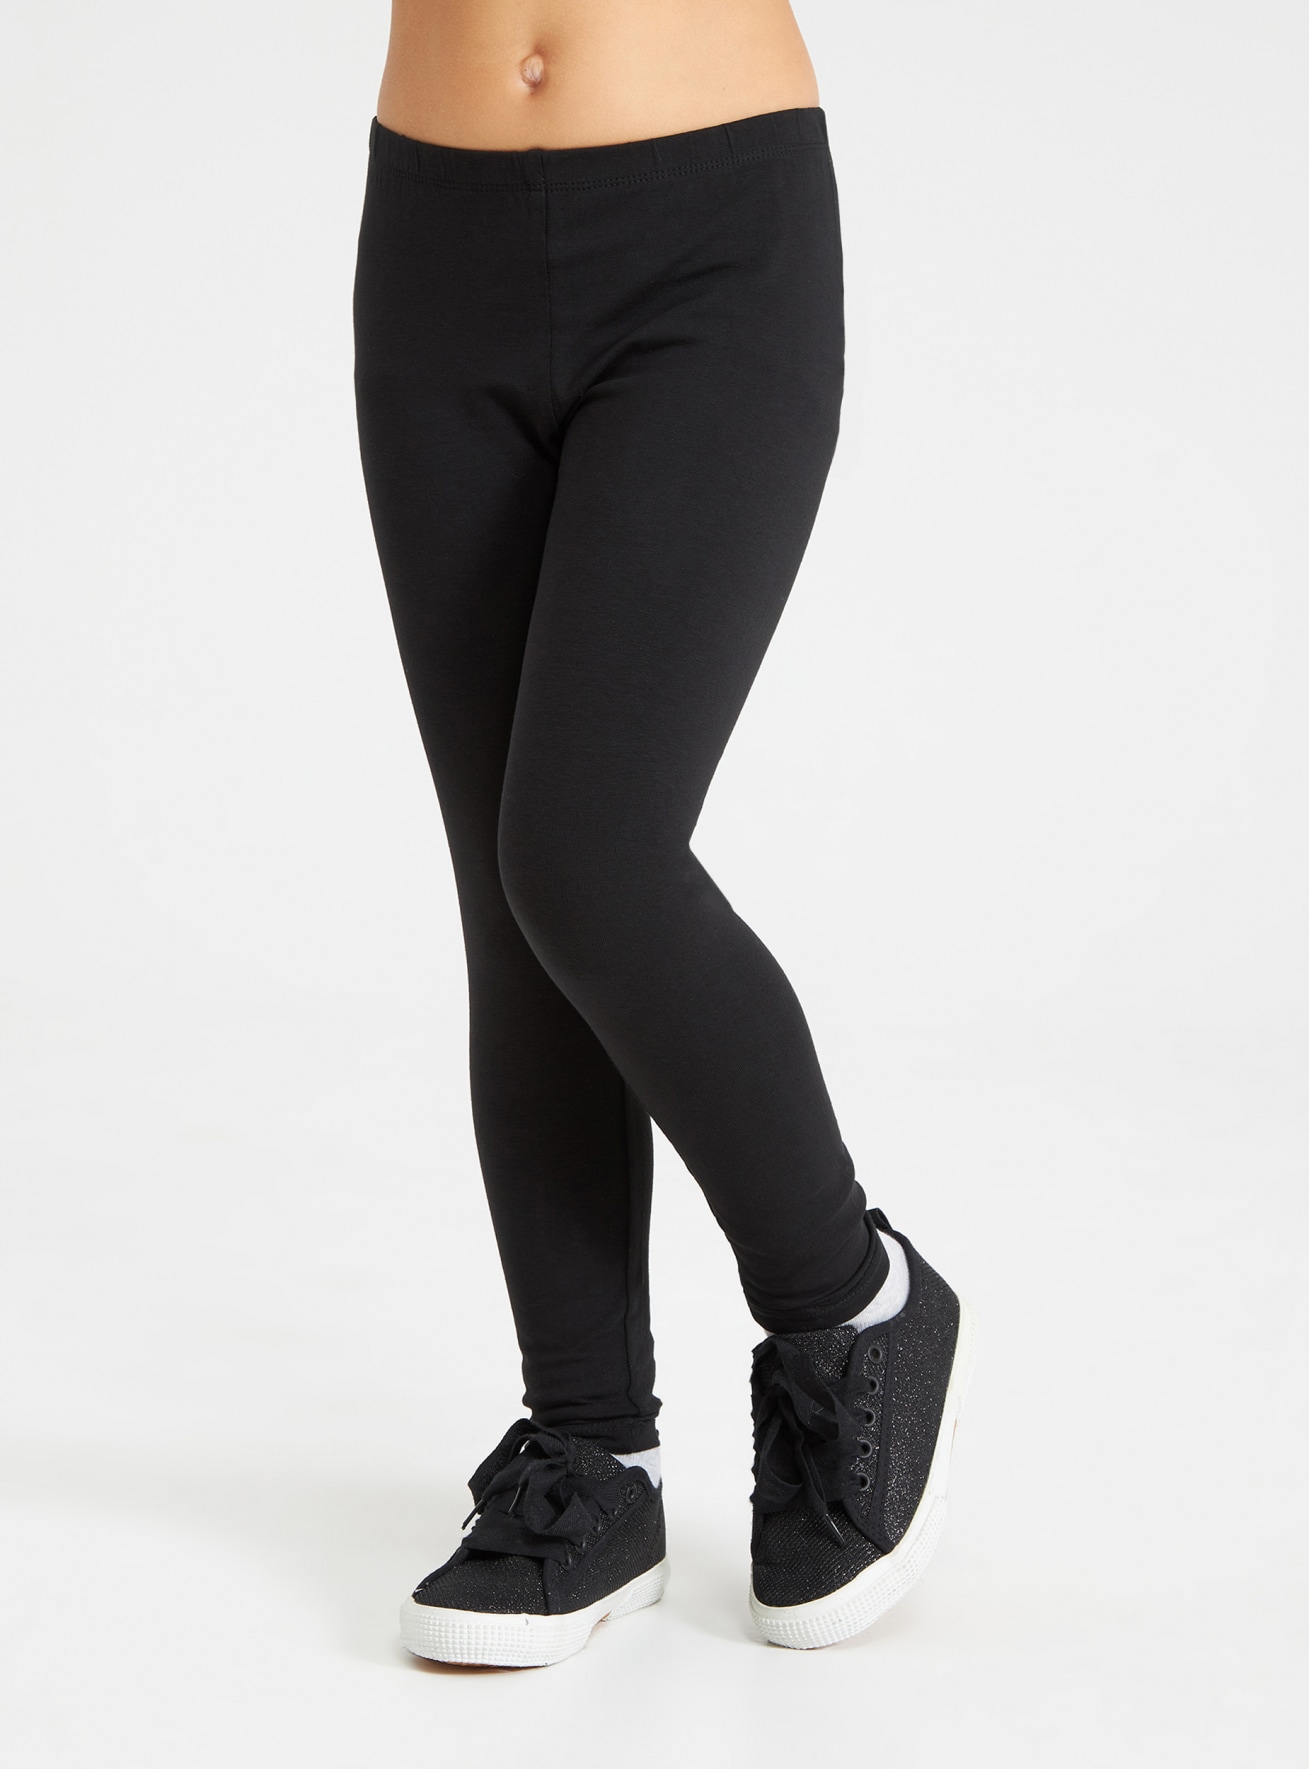 Women's Activewear: Shop Leggings Online | Sokim USA